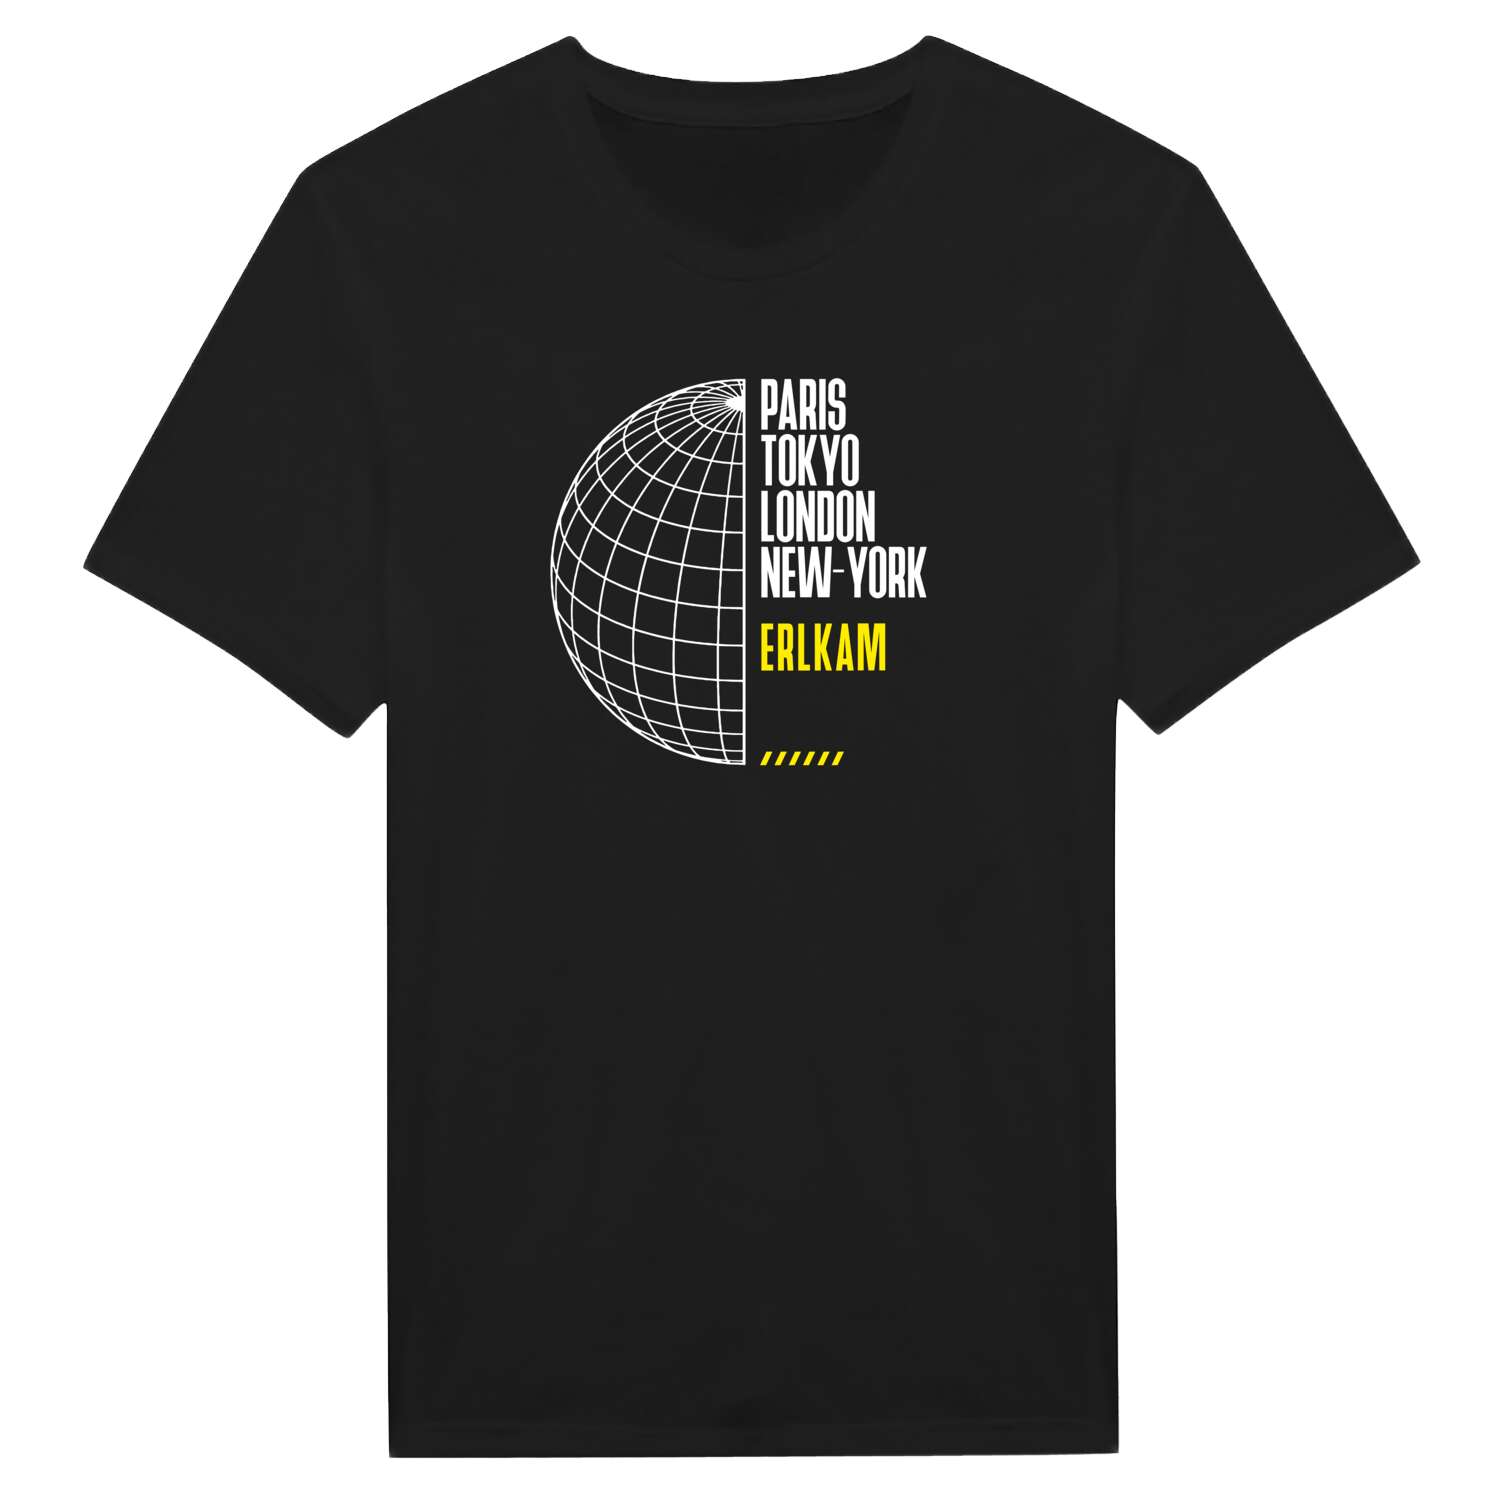 Erlkam T-Shirt »Paris Tokyo London«